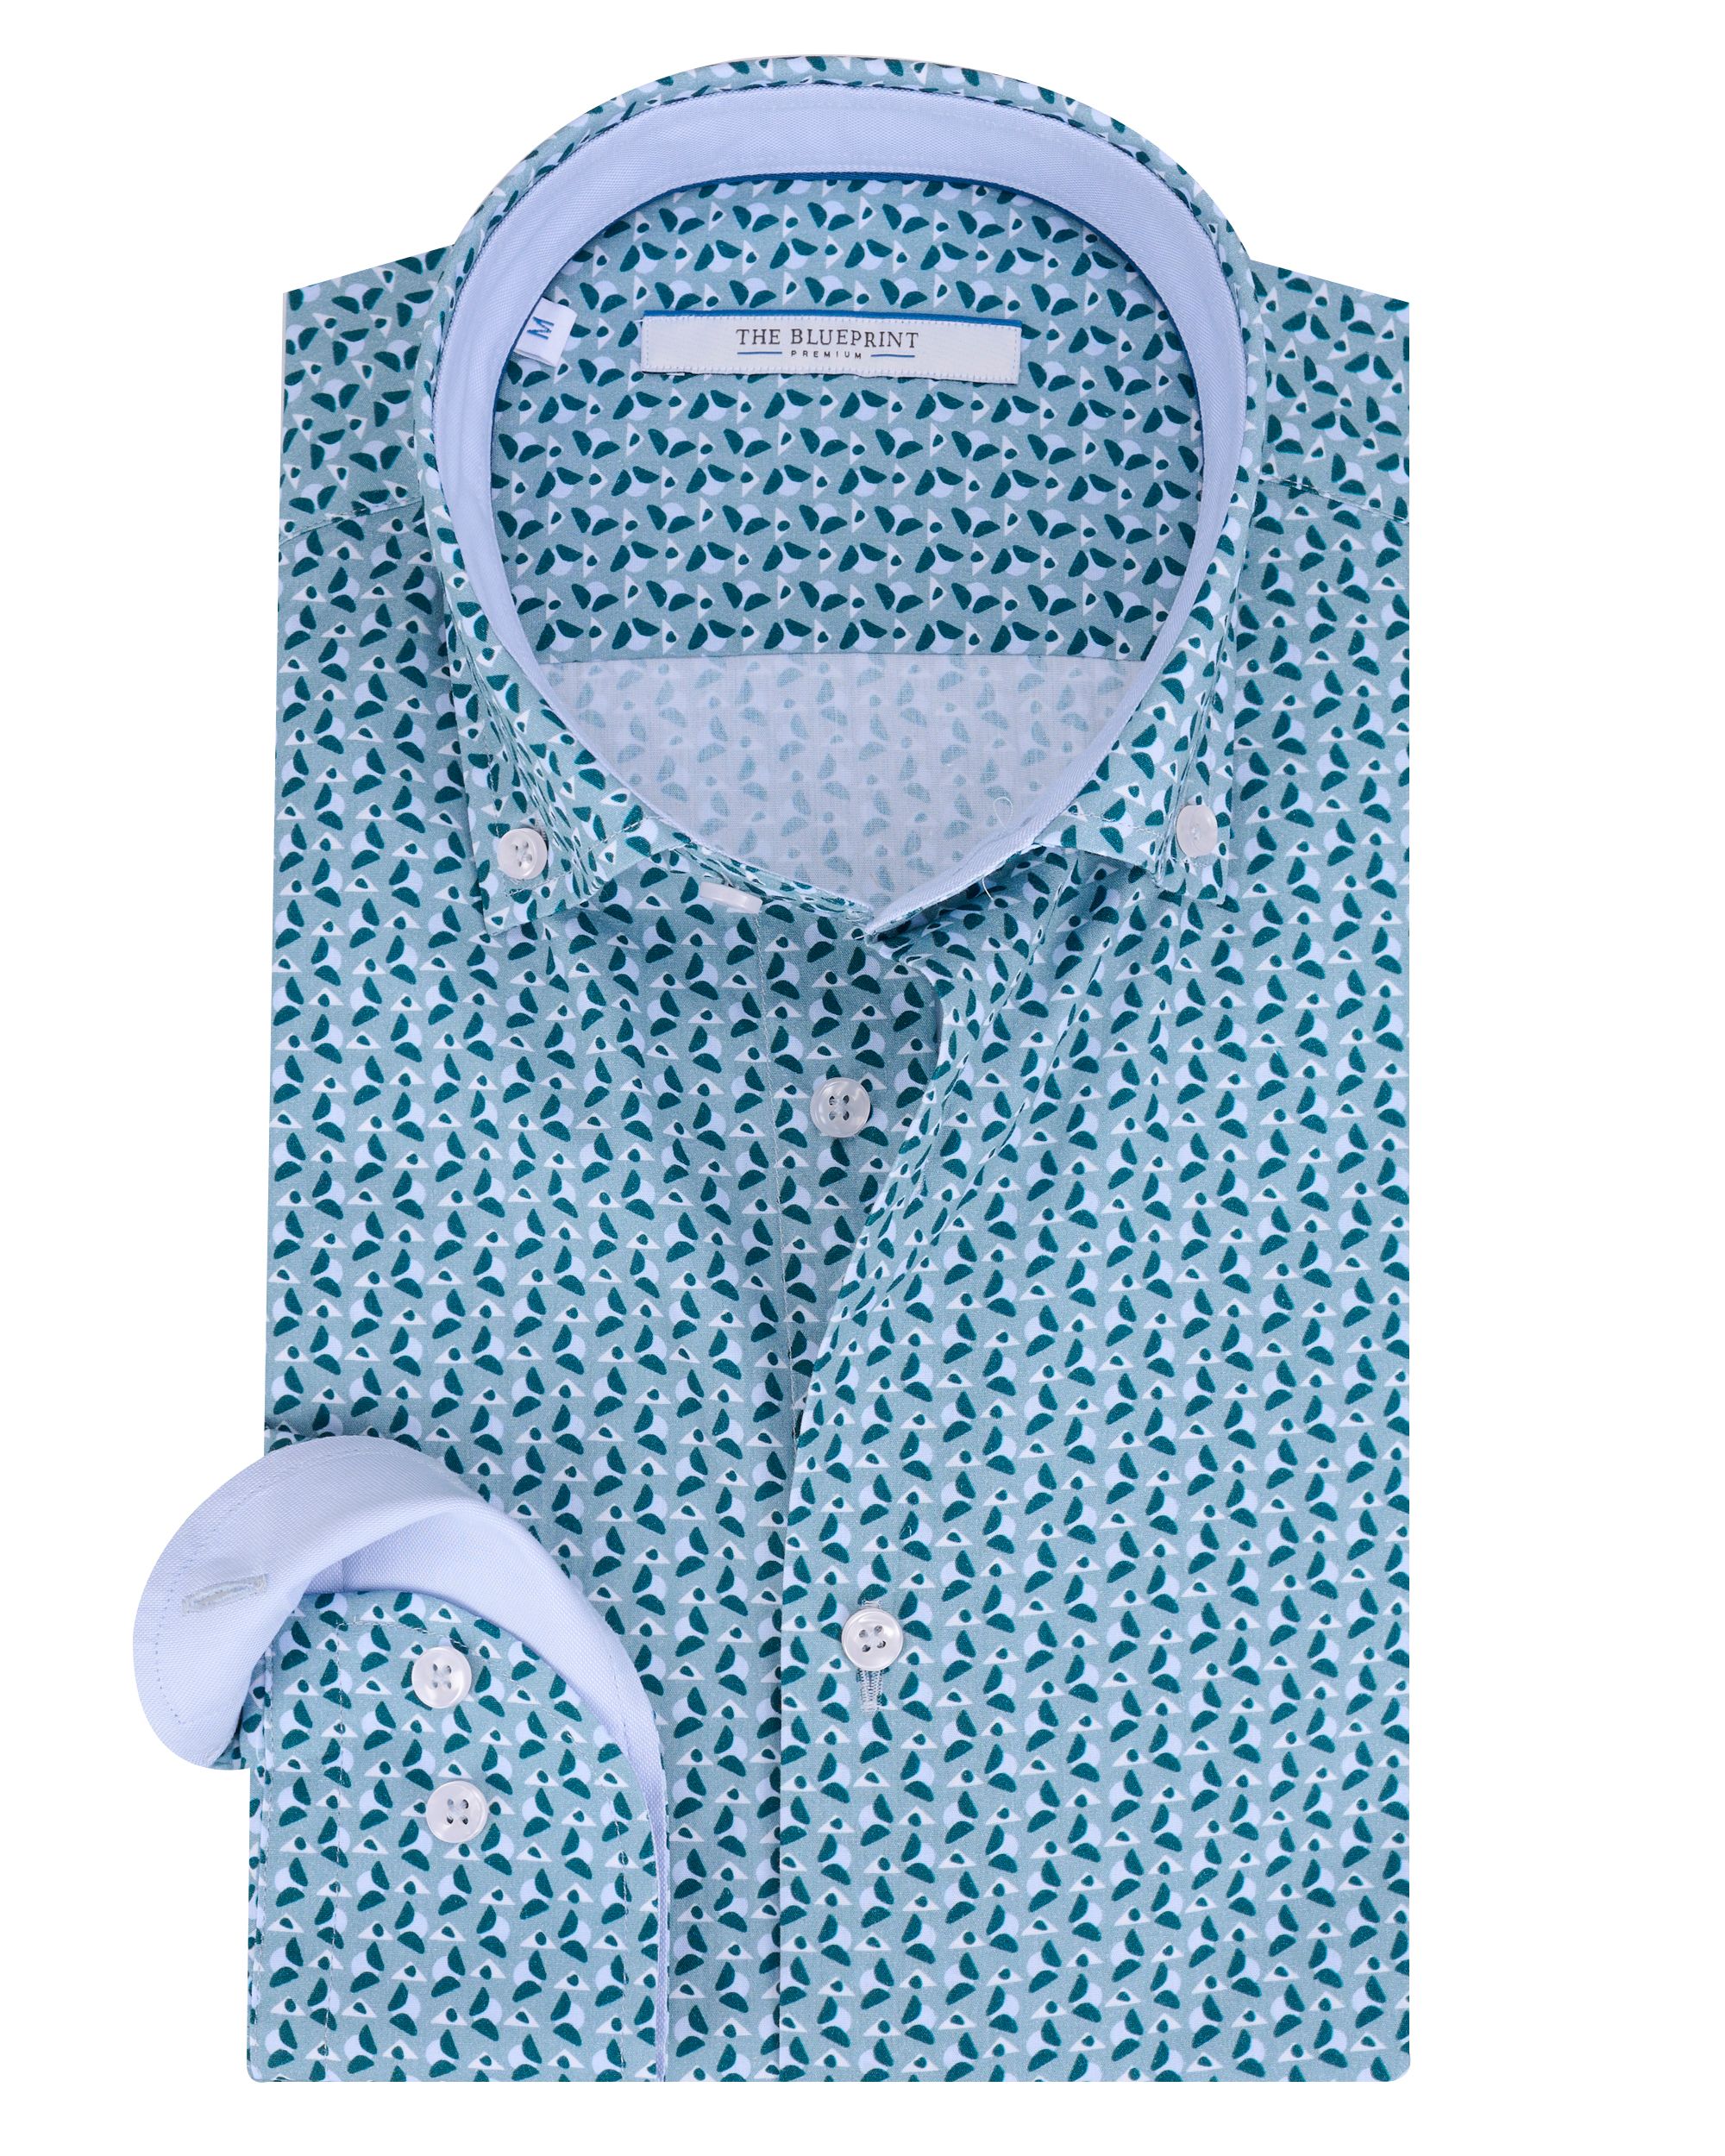 The BLUEPRINT Premium - Trendy overhemd LM Groen dessin 086649-001-L